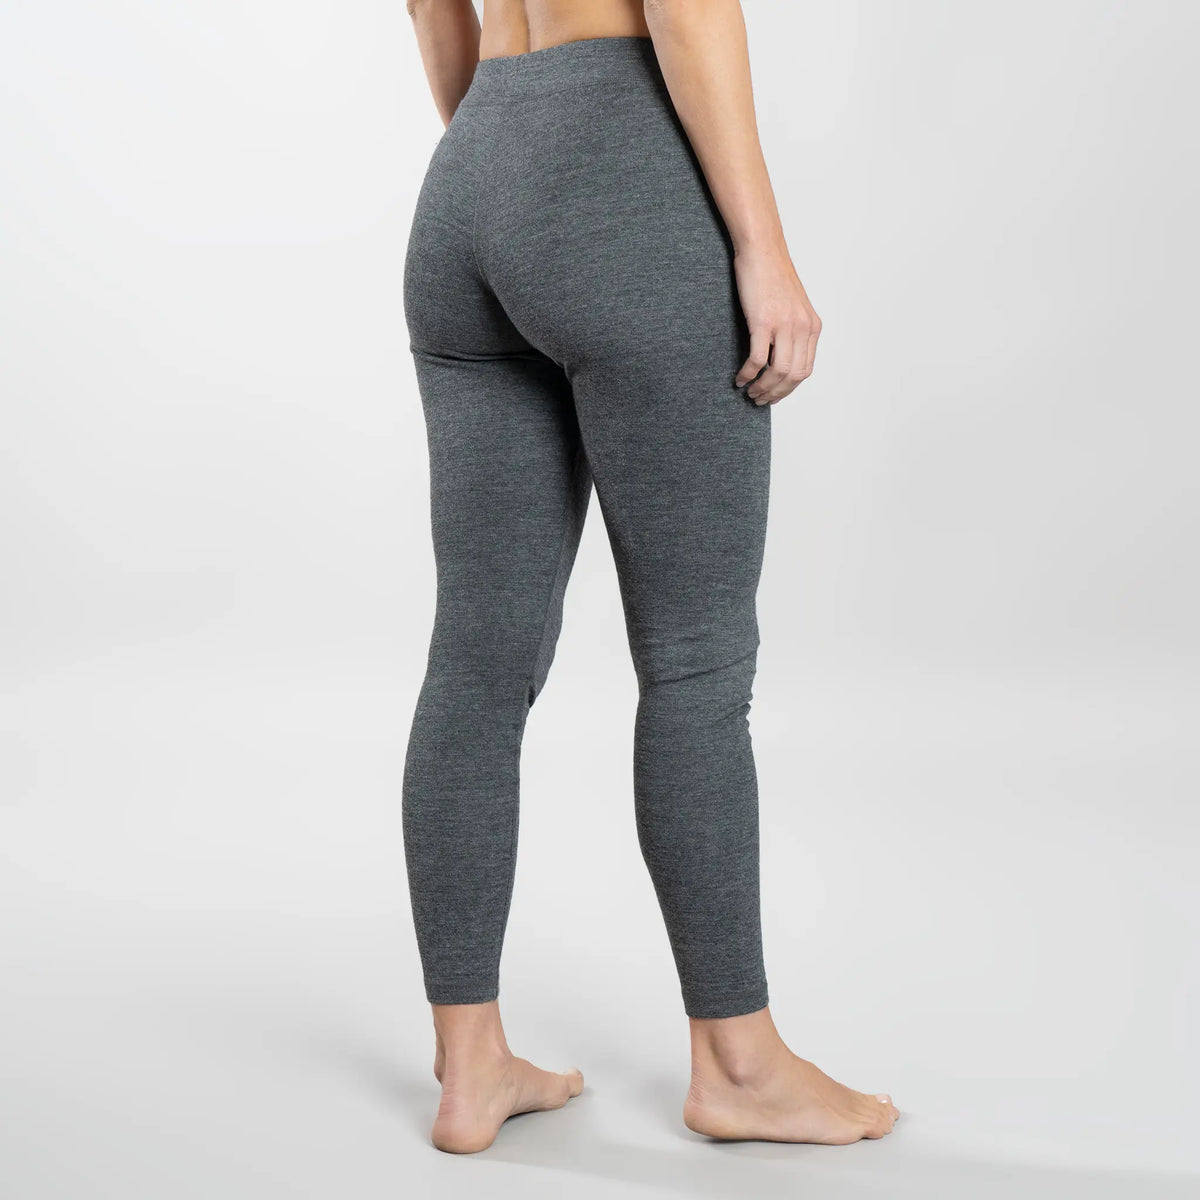 womens warmest leggings lightweight color gray